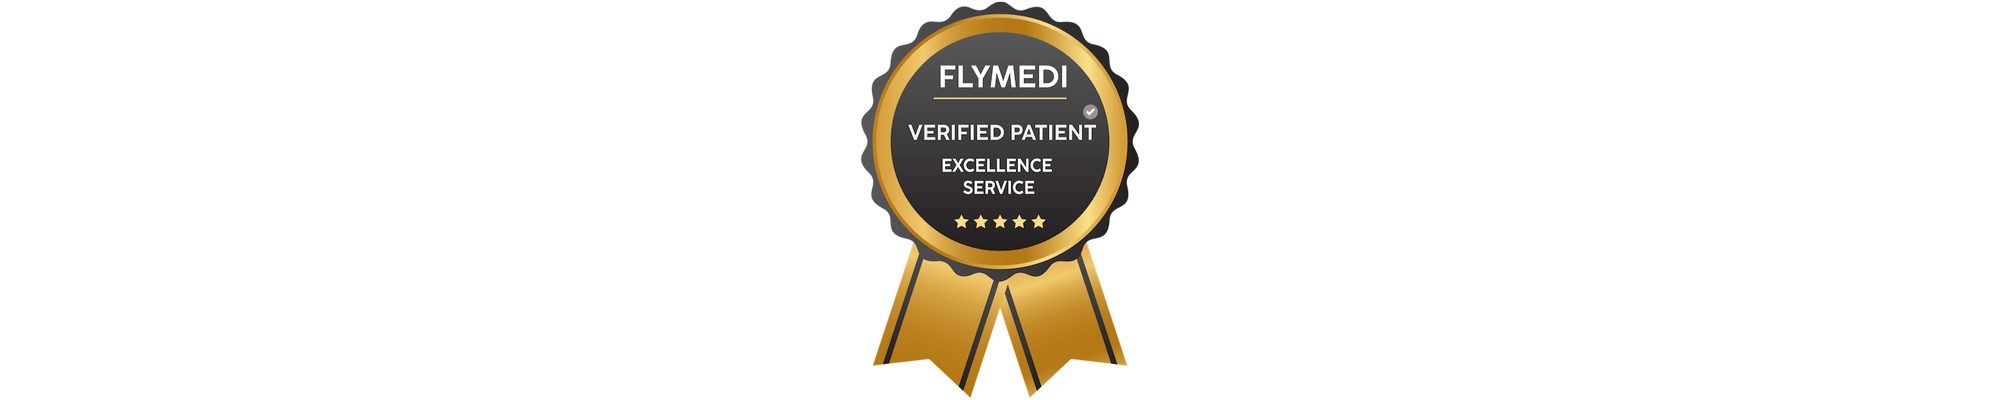 Flymedi Verified Patients Excellence Service